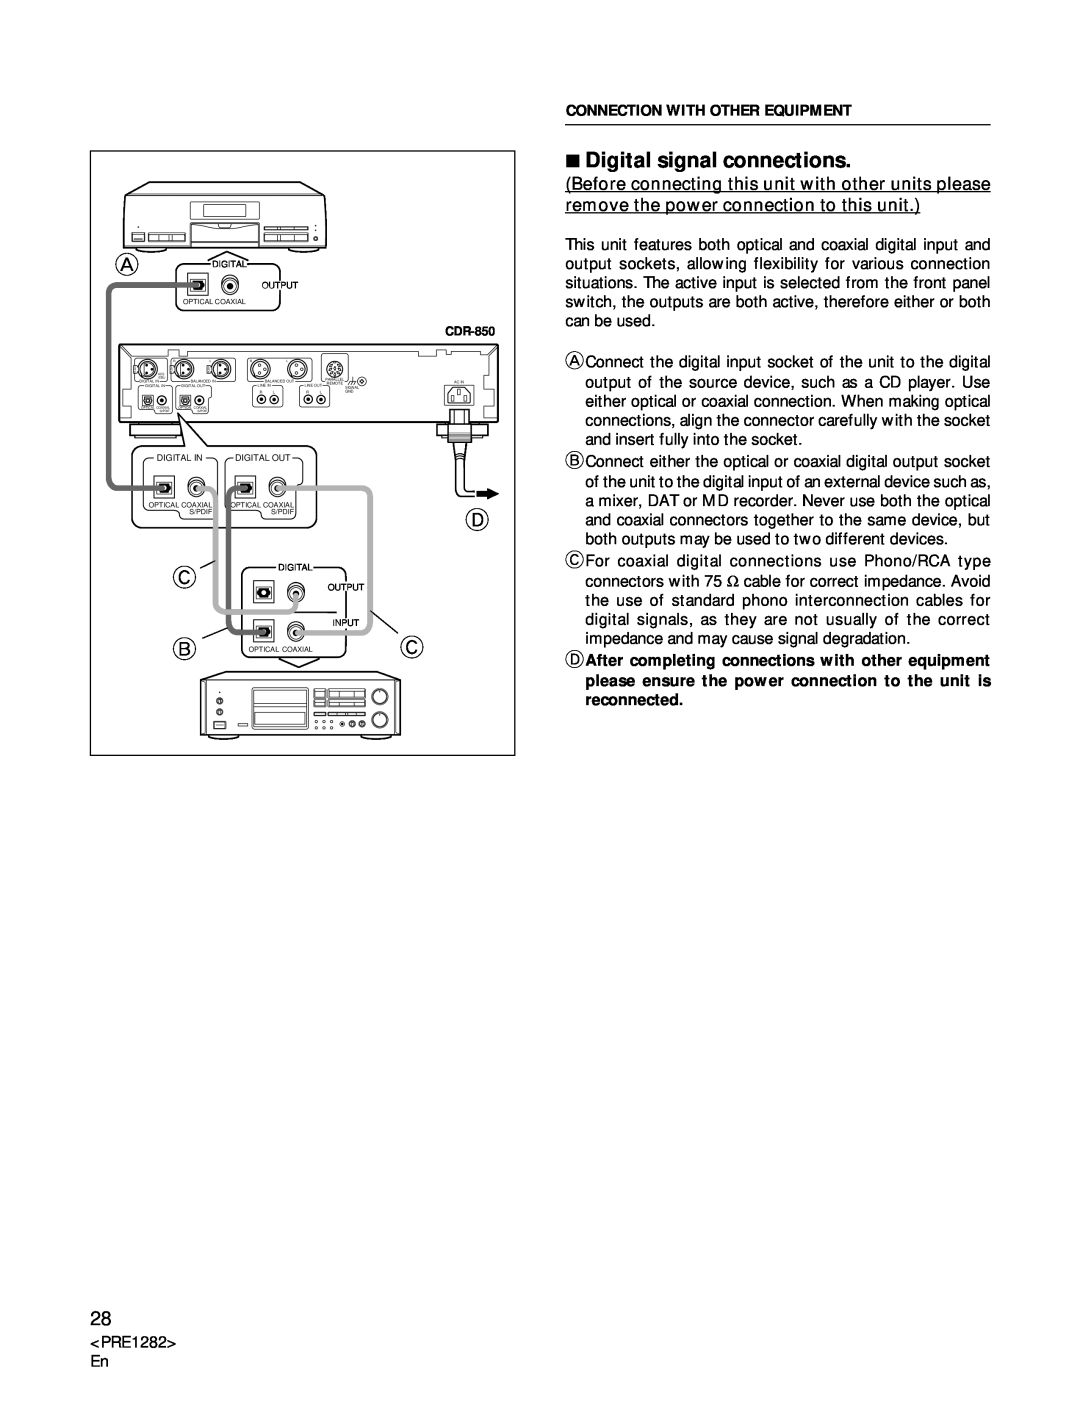 Americana Appliances CDR-850 manual 7Digital signal connections 